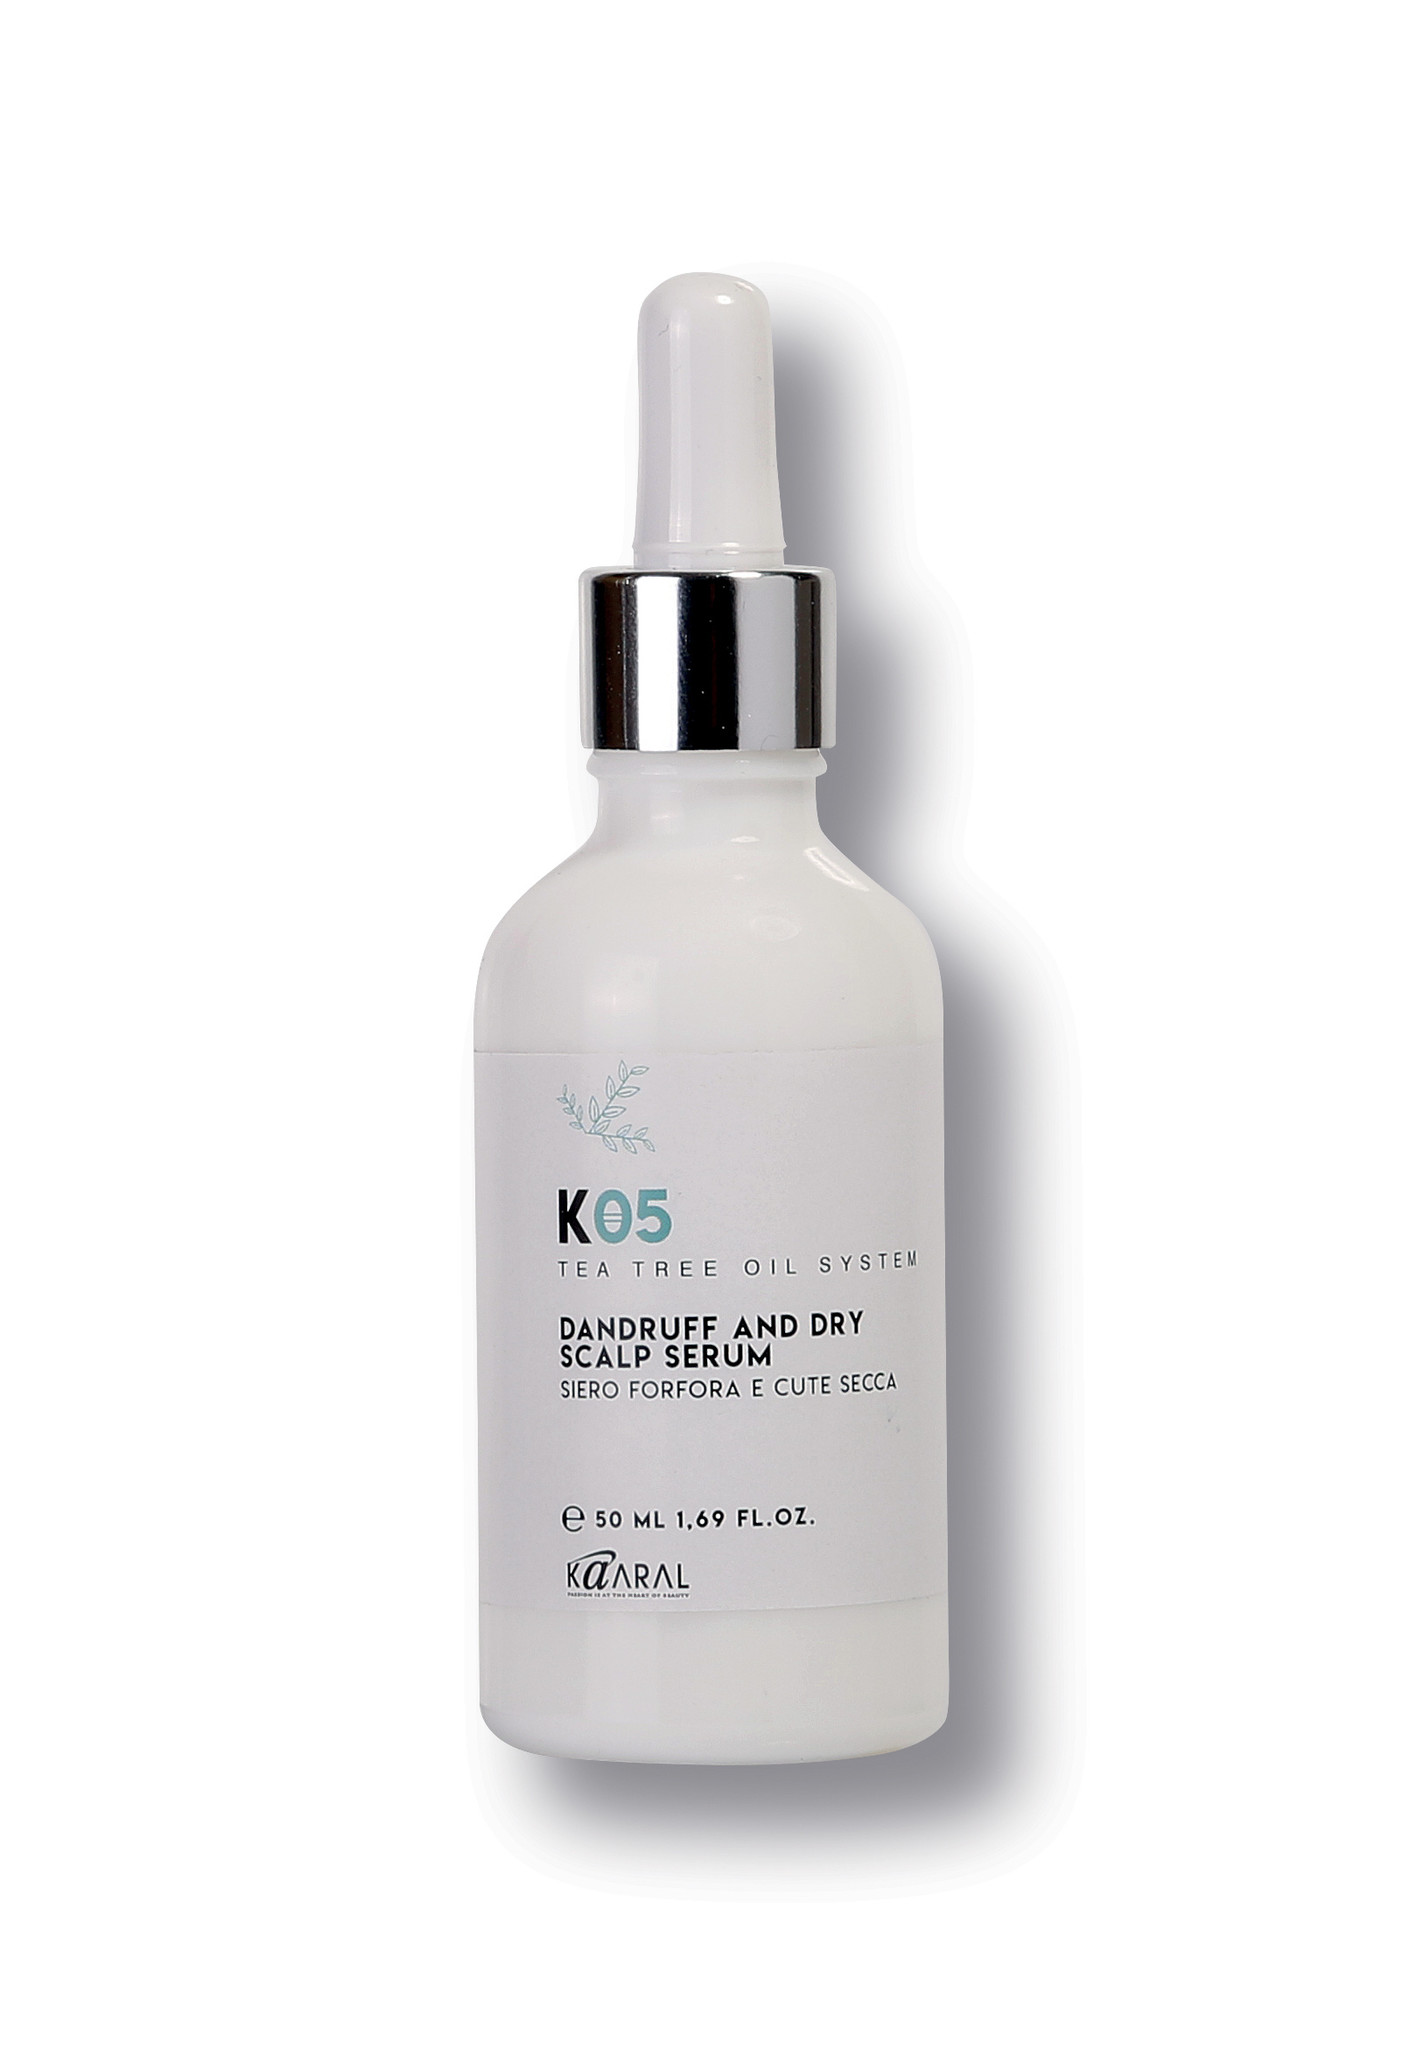 Kaaral K05 Dandruff and dry scalp serum